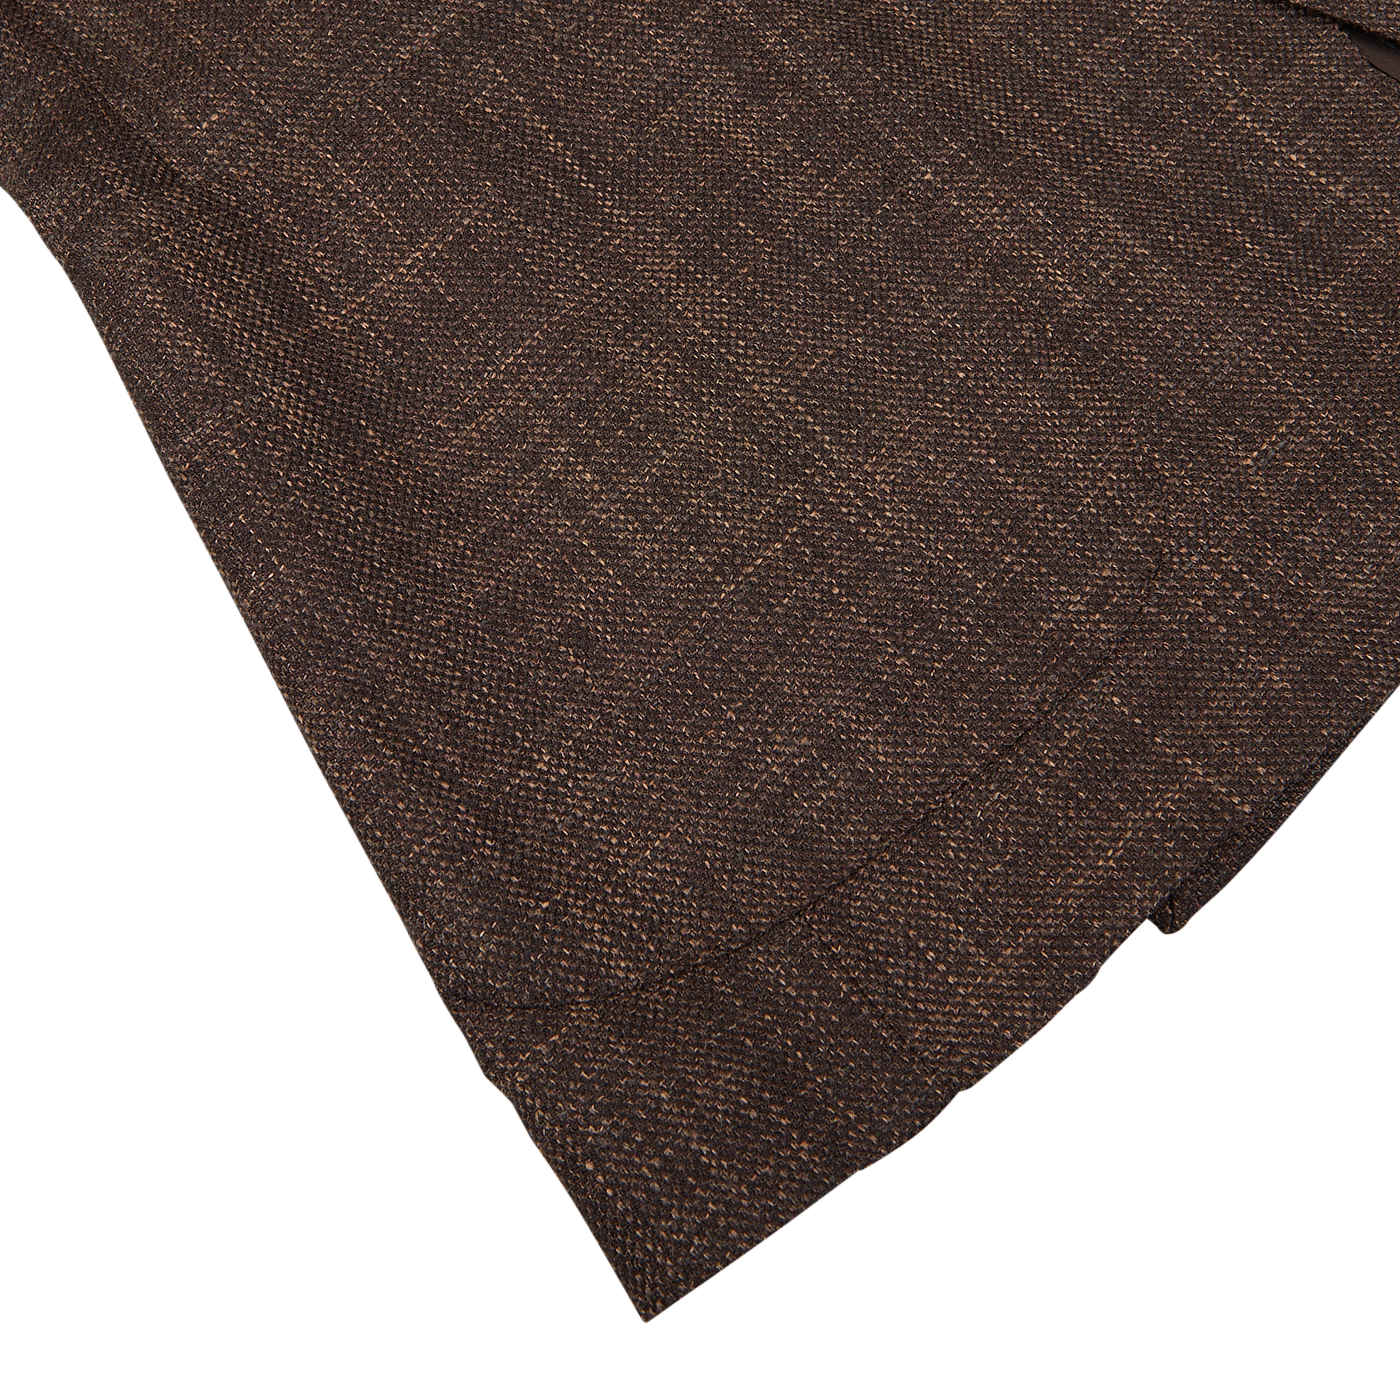 Dark Brown Melange Wool Linen Silk Blazer by Tagliatore with a folded edge on a white background.